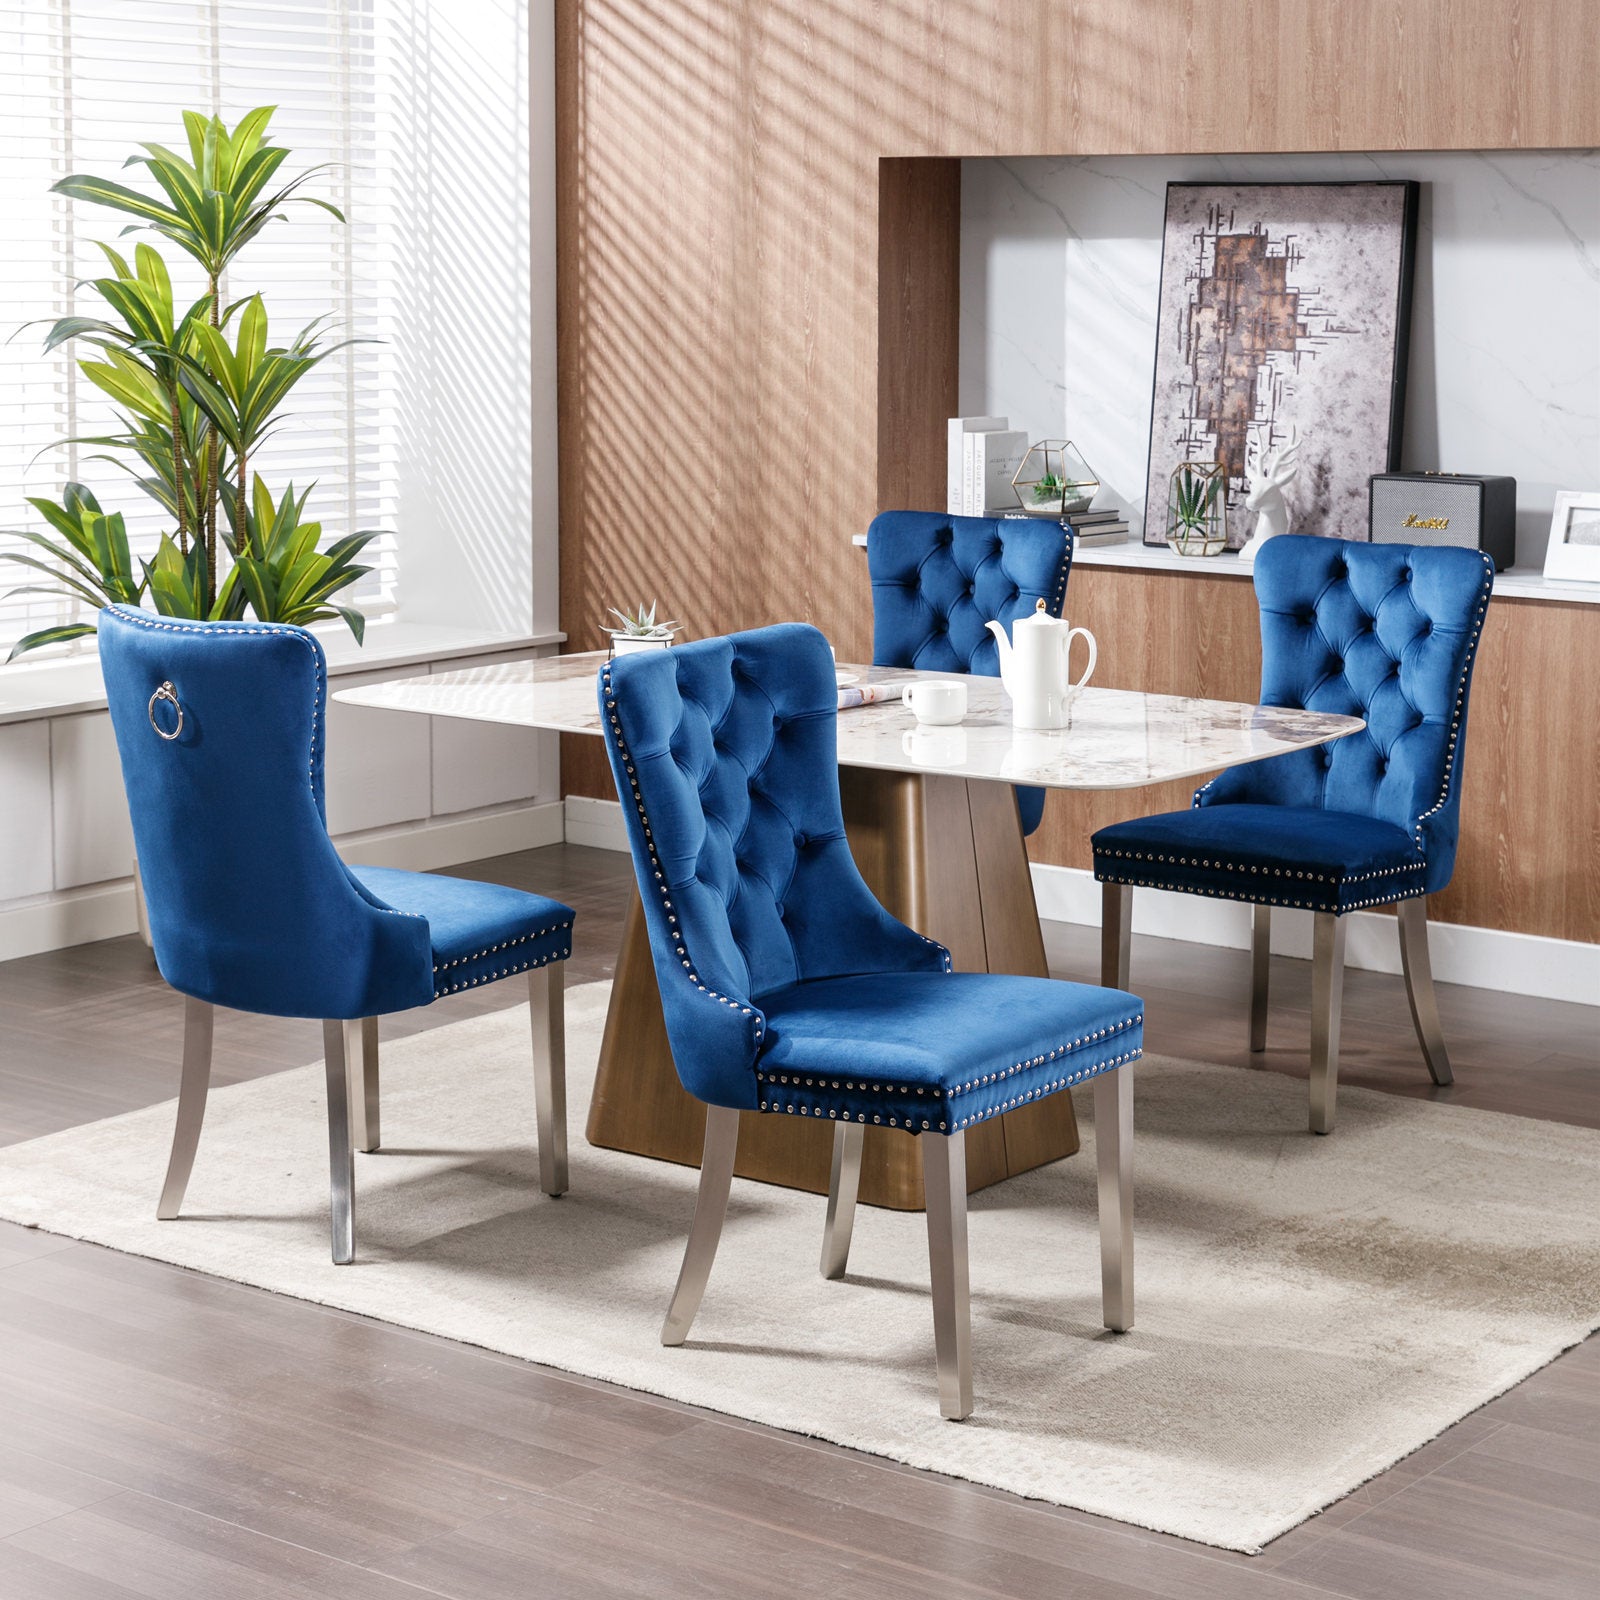 Chloe Set of 2 Blue Velvet Dining Chairs with Chrome Stainless Legs